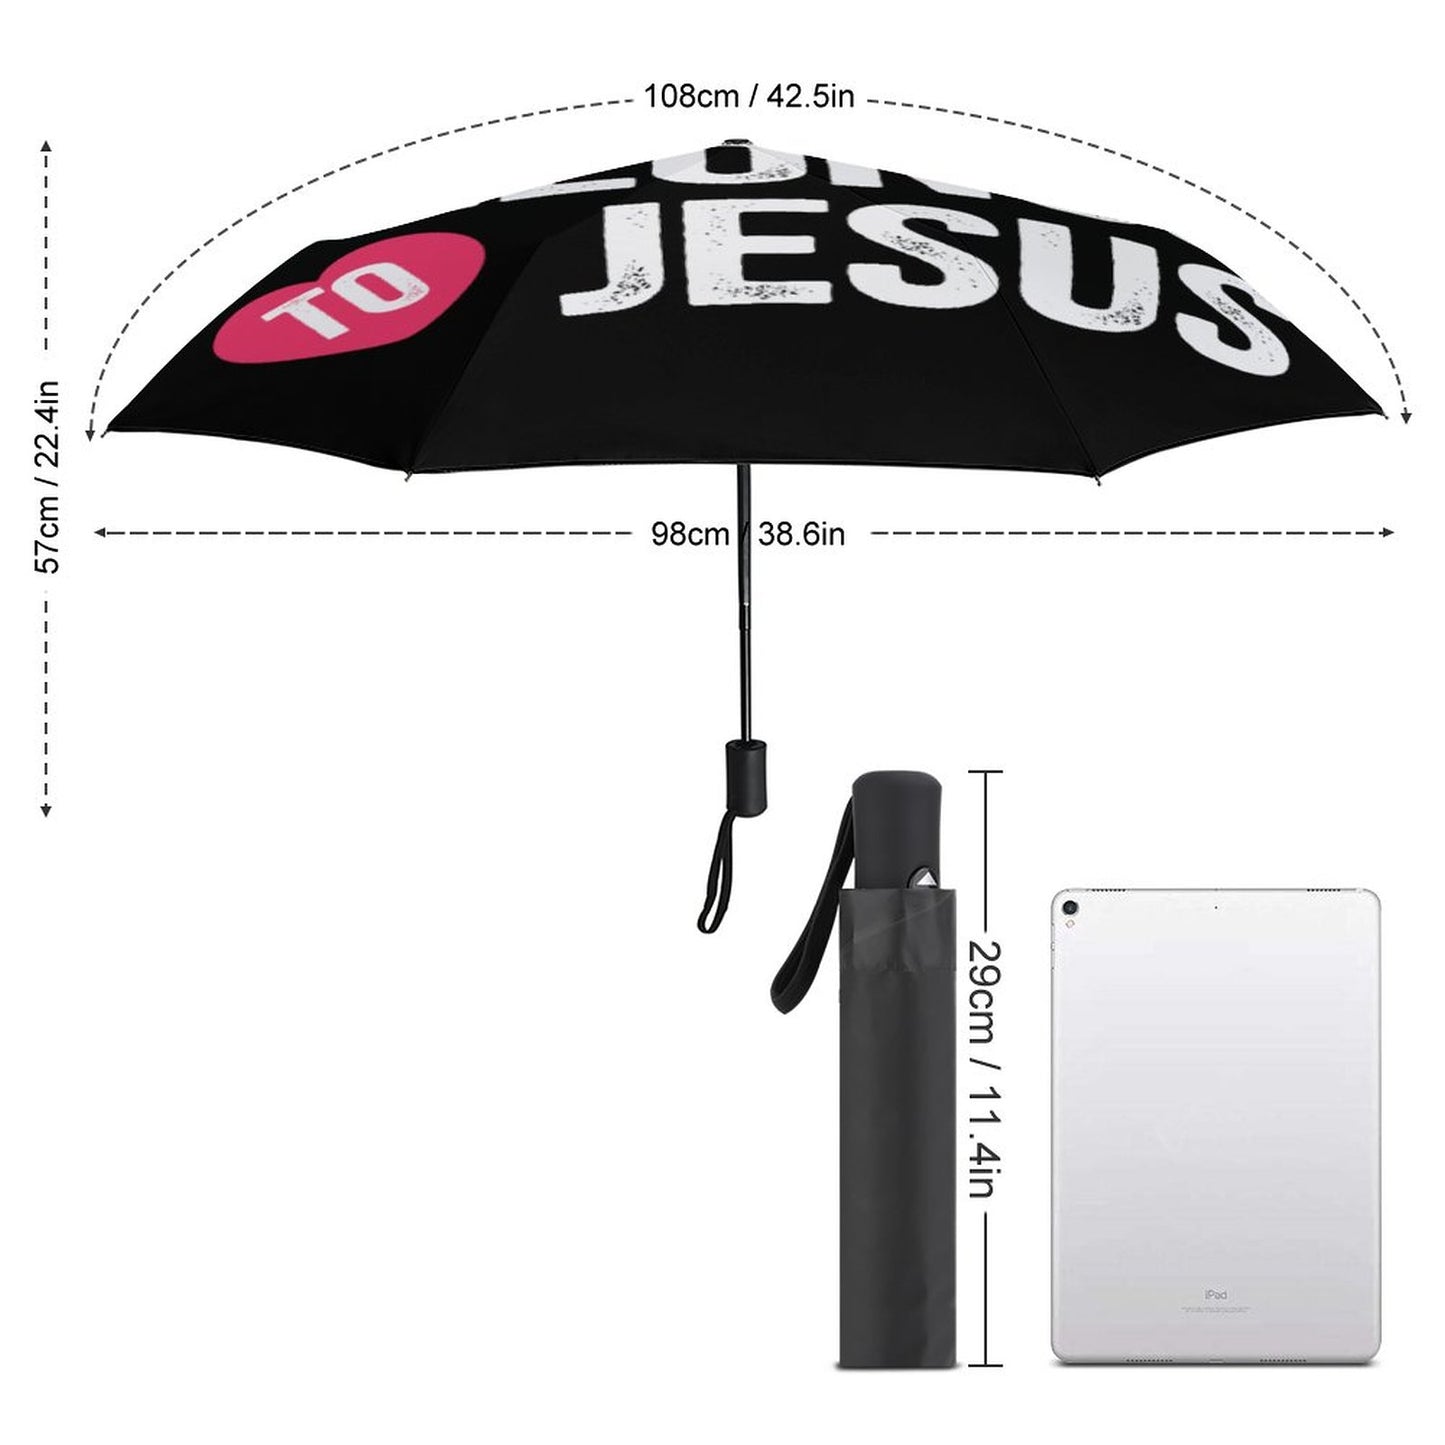 My Heart Belongs To Jesus Christian Umbrella